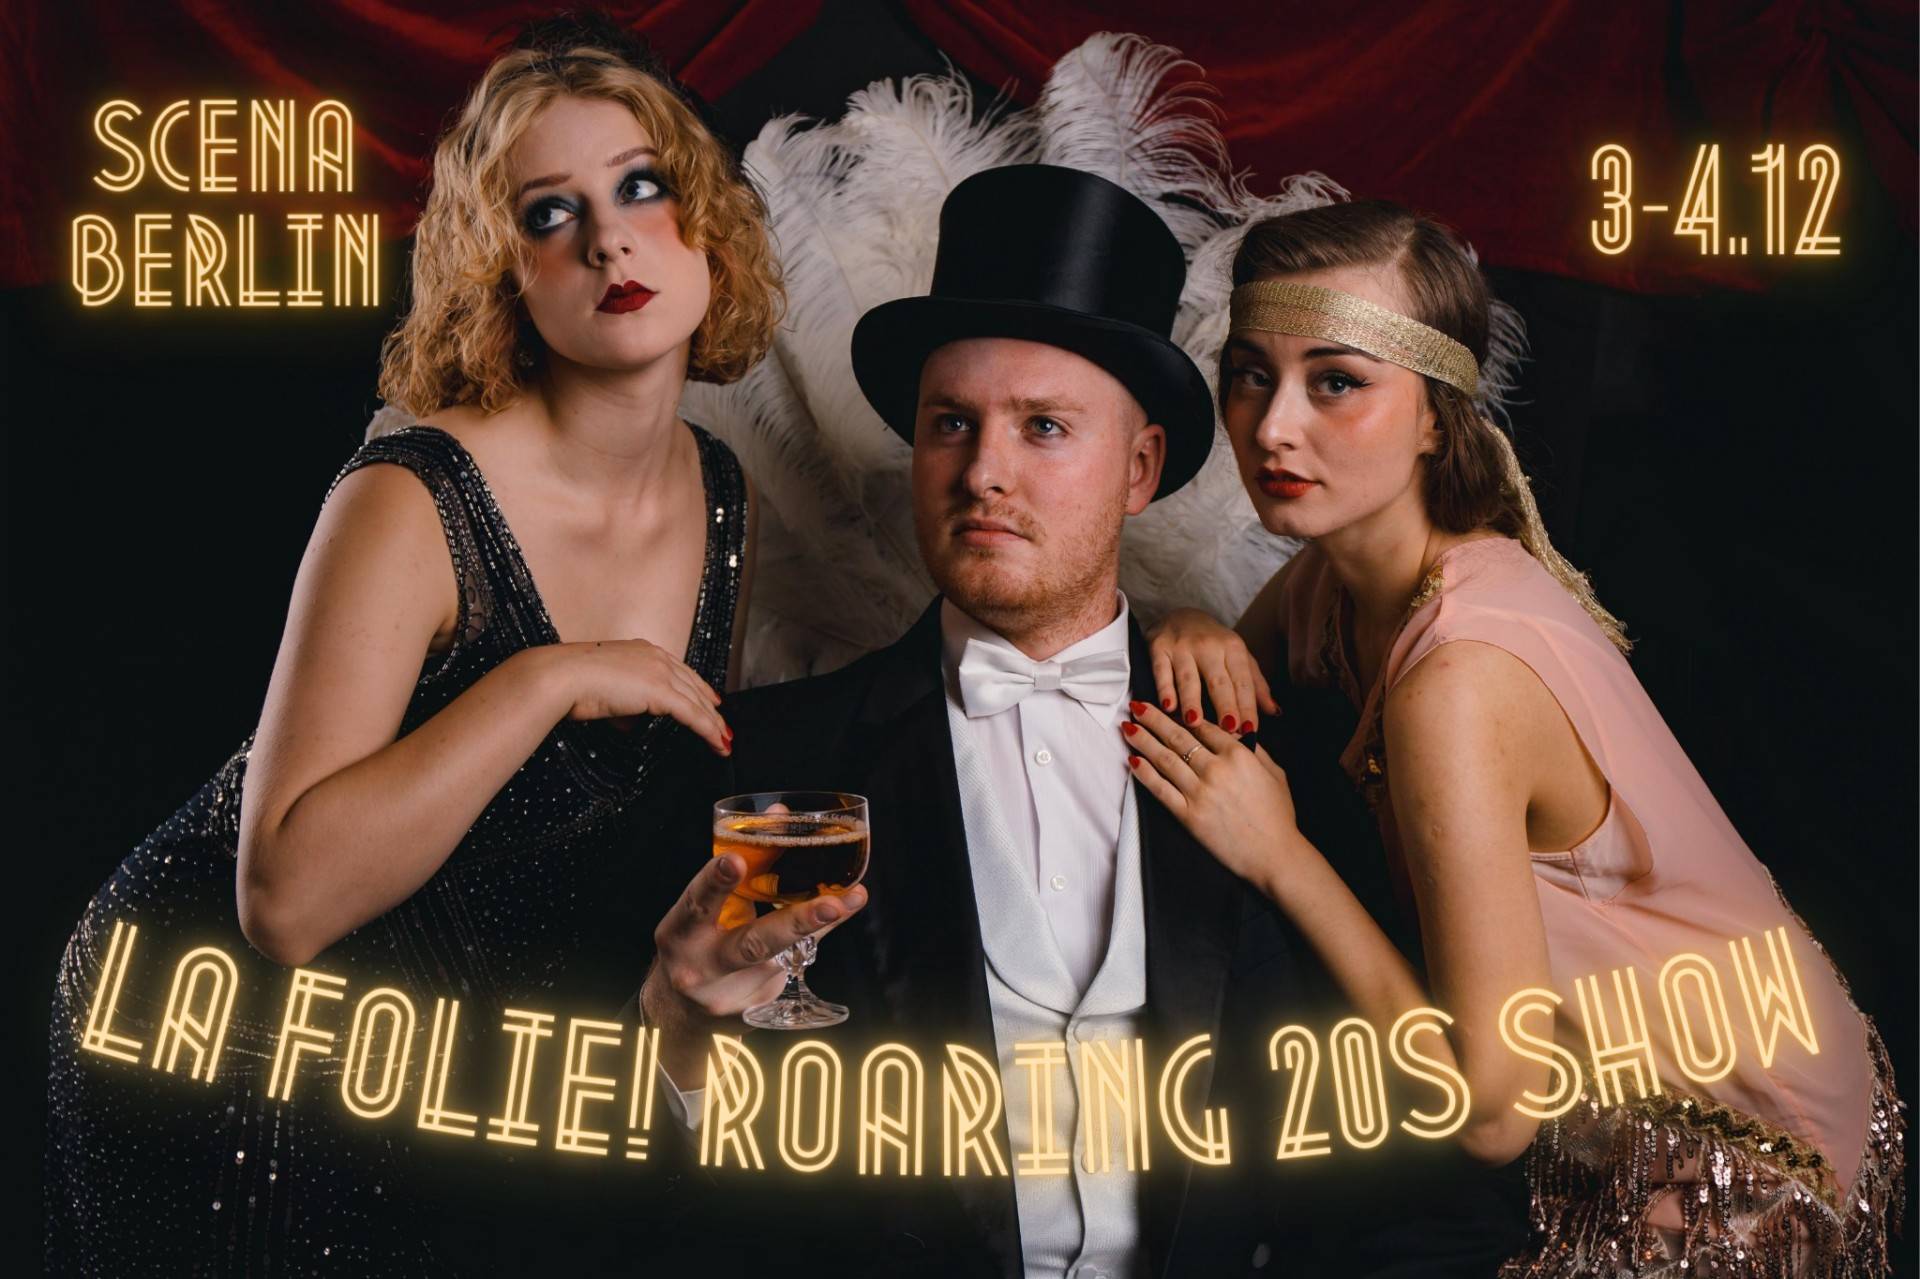 Scena Berlin: La Folie! Roaring 20s Show